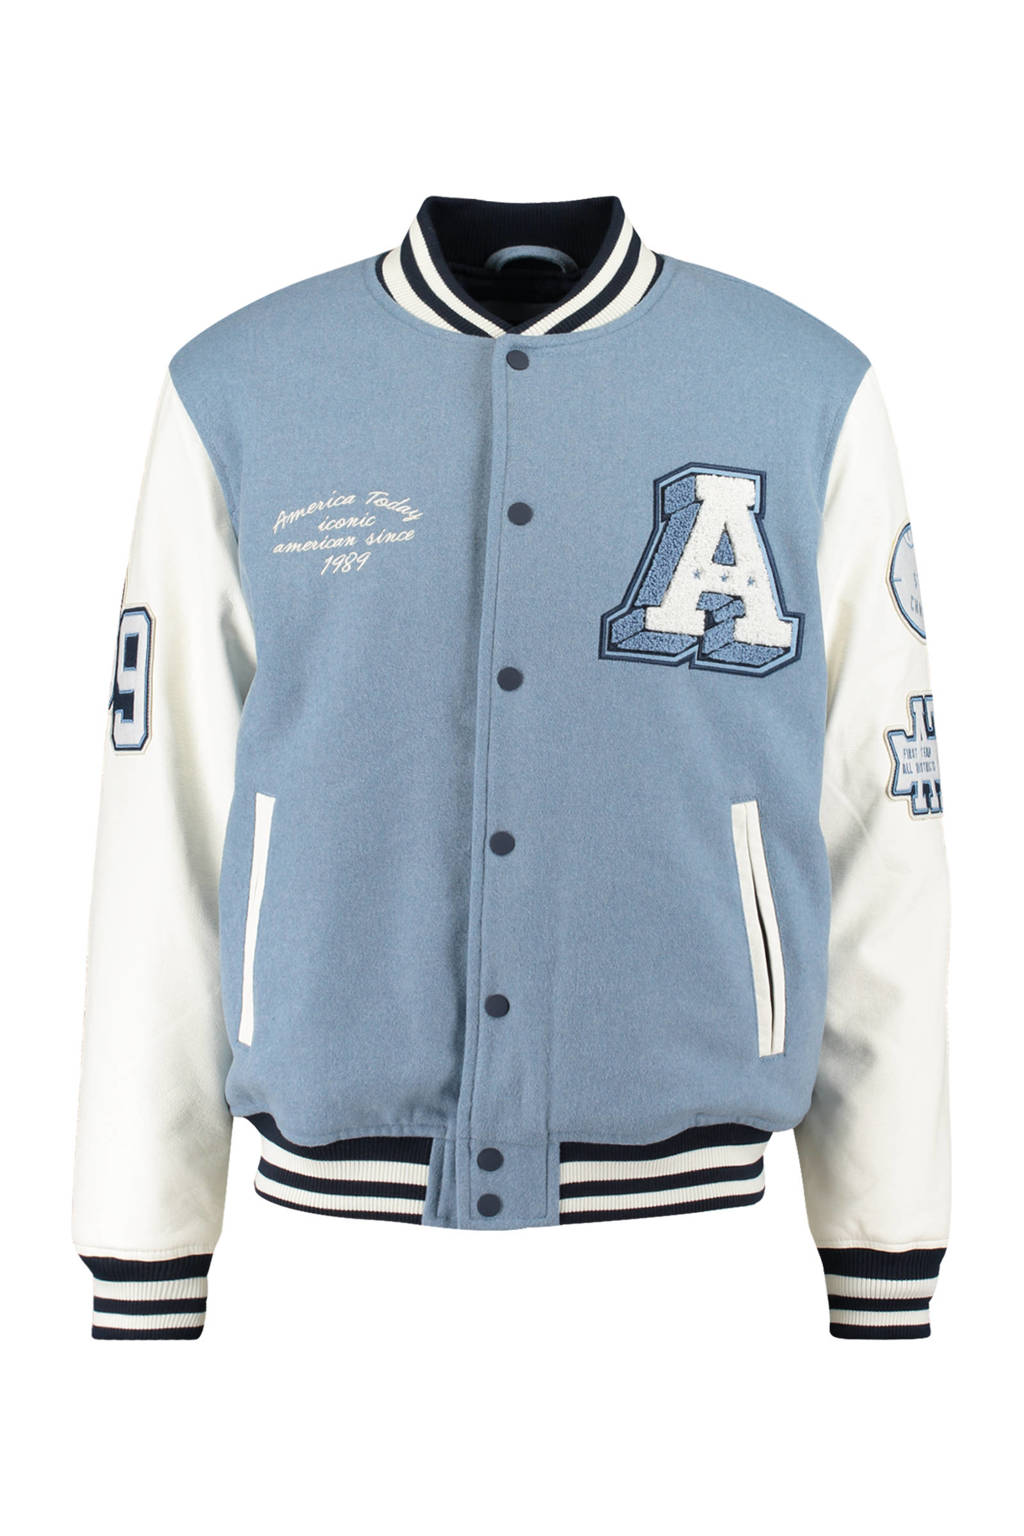 Over instelling web Assimileren America Today unisex baseball jacket Joni met patches blauw | wehkamp